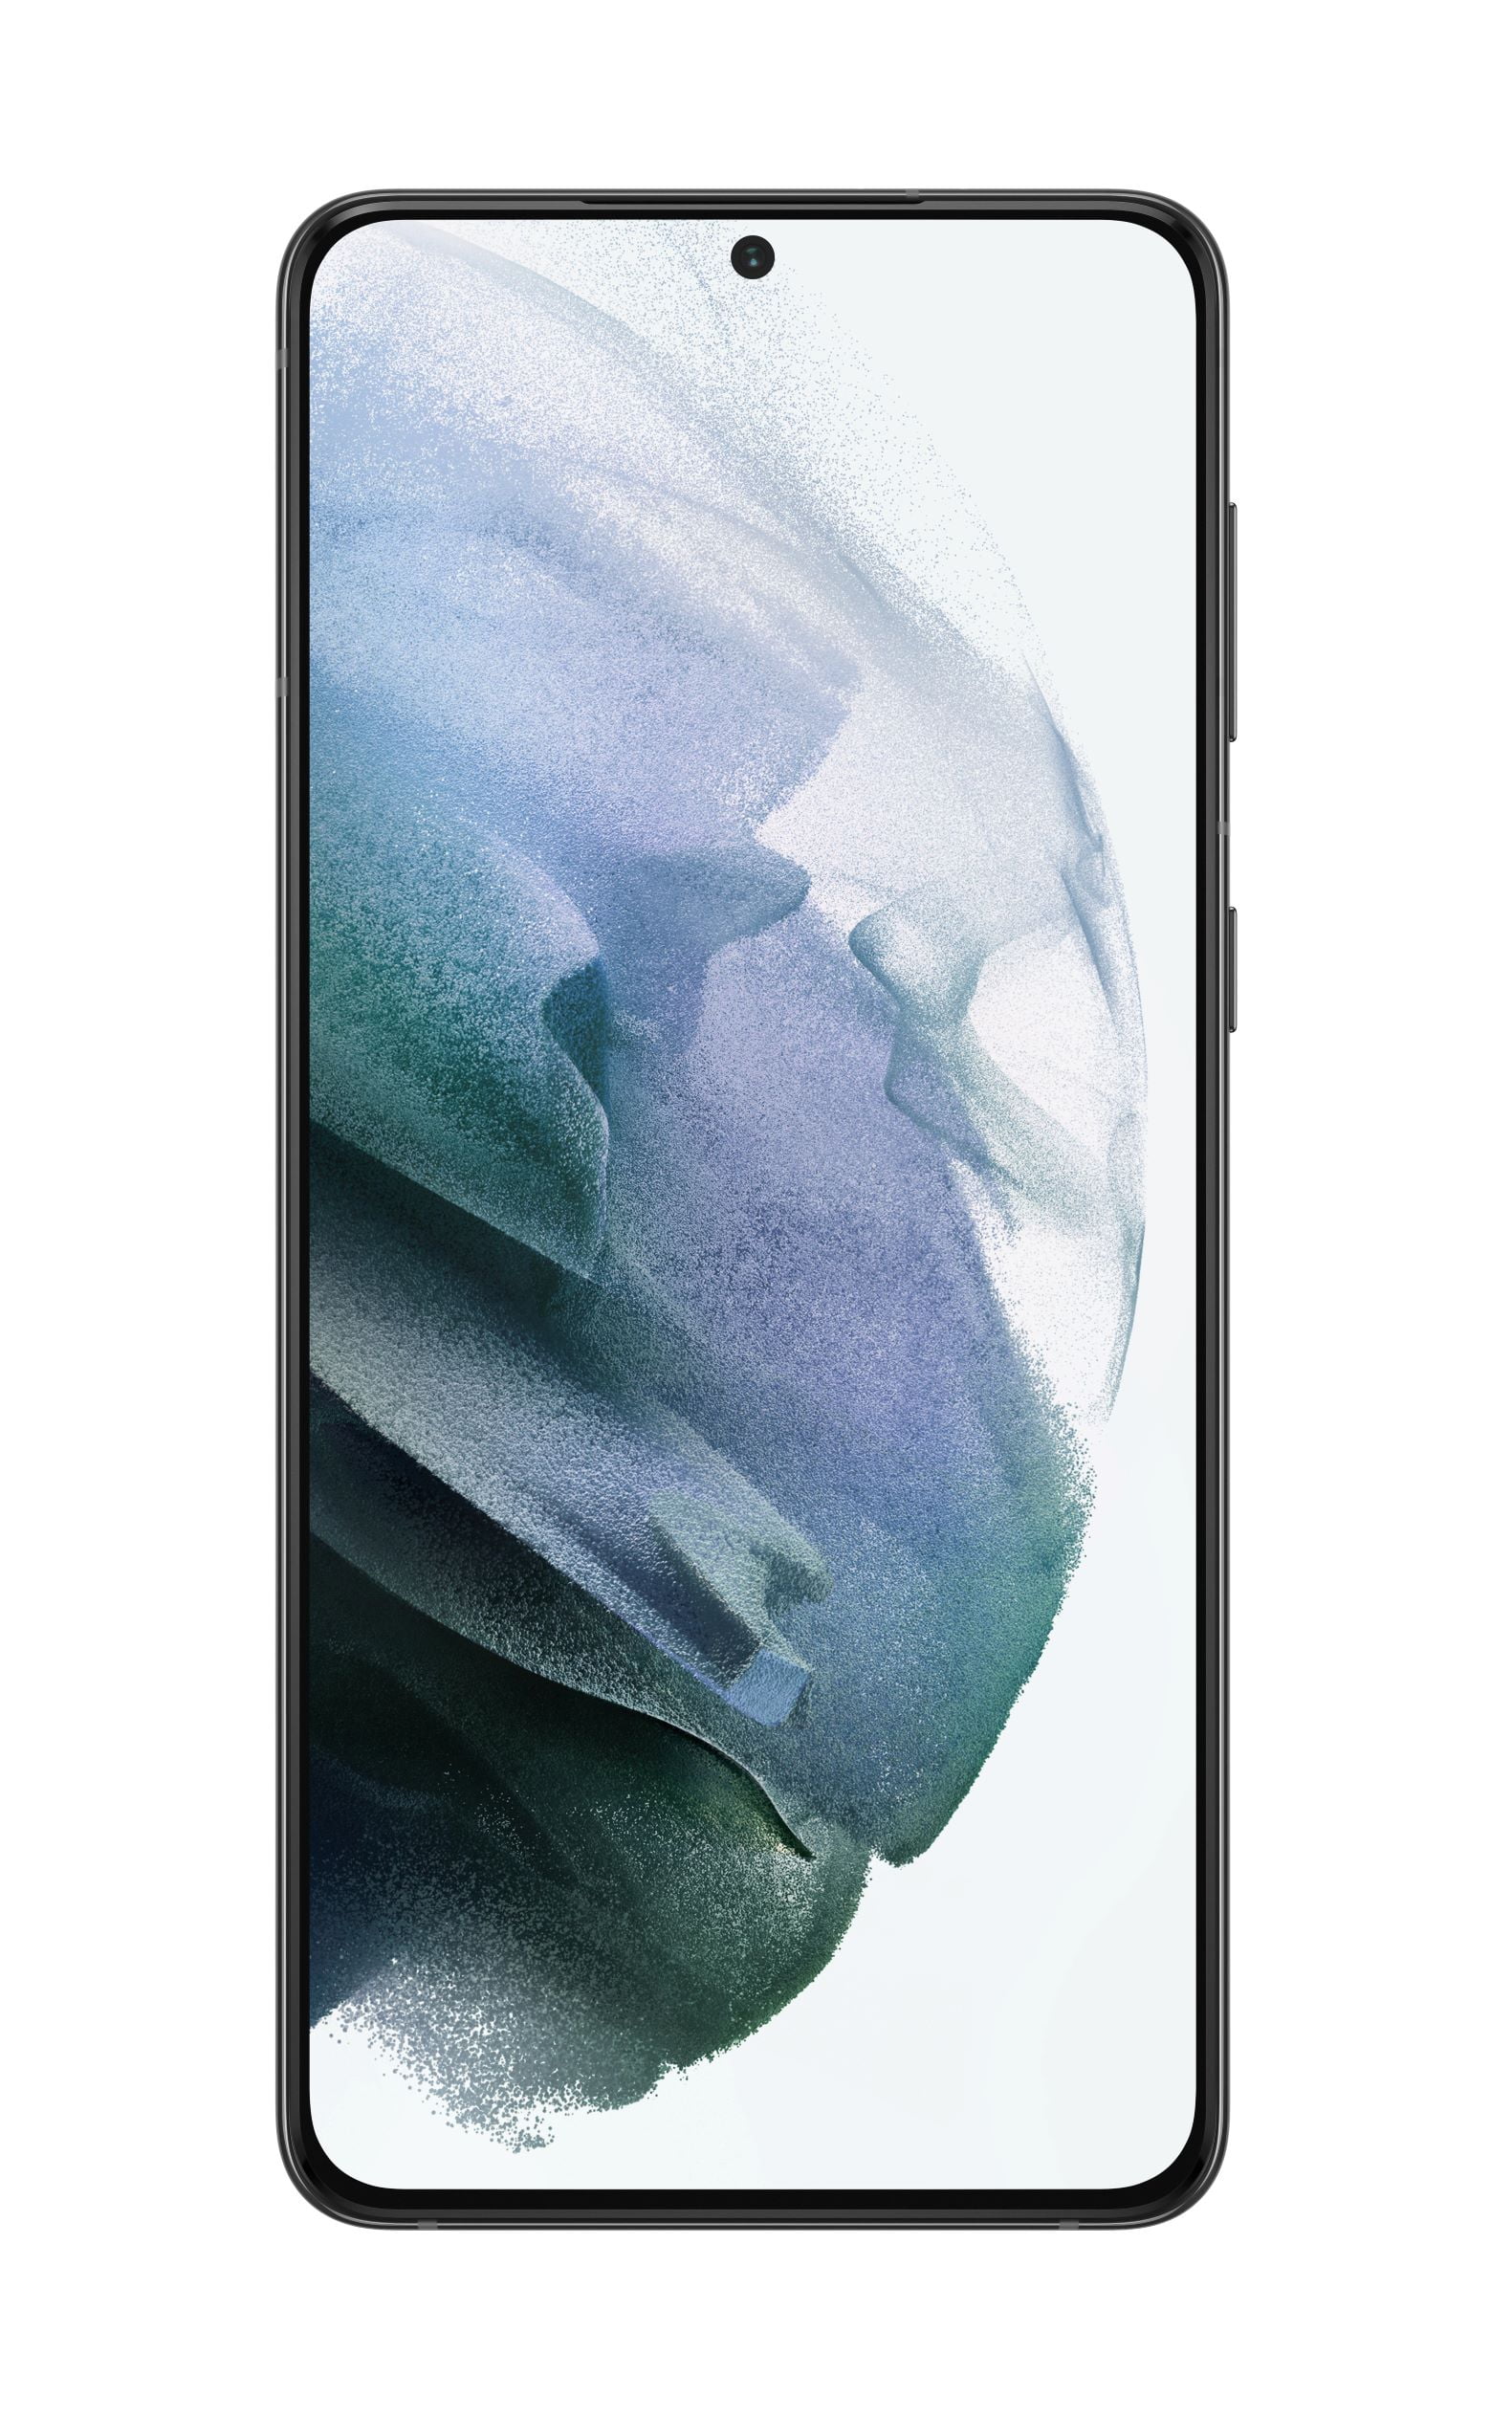 Samsung Galaxy S21 Ultra 5G SM-G998U - 512GB - Phantom Black (Unlocked)